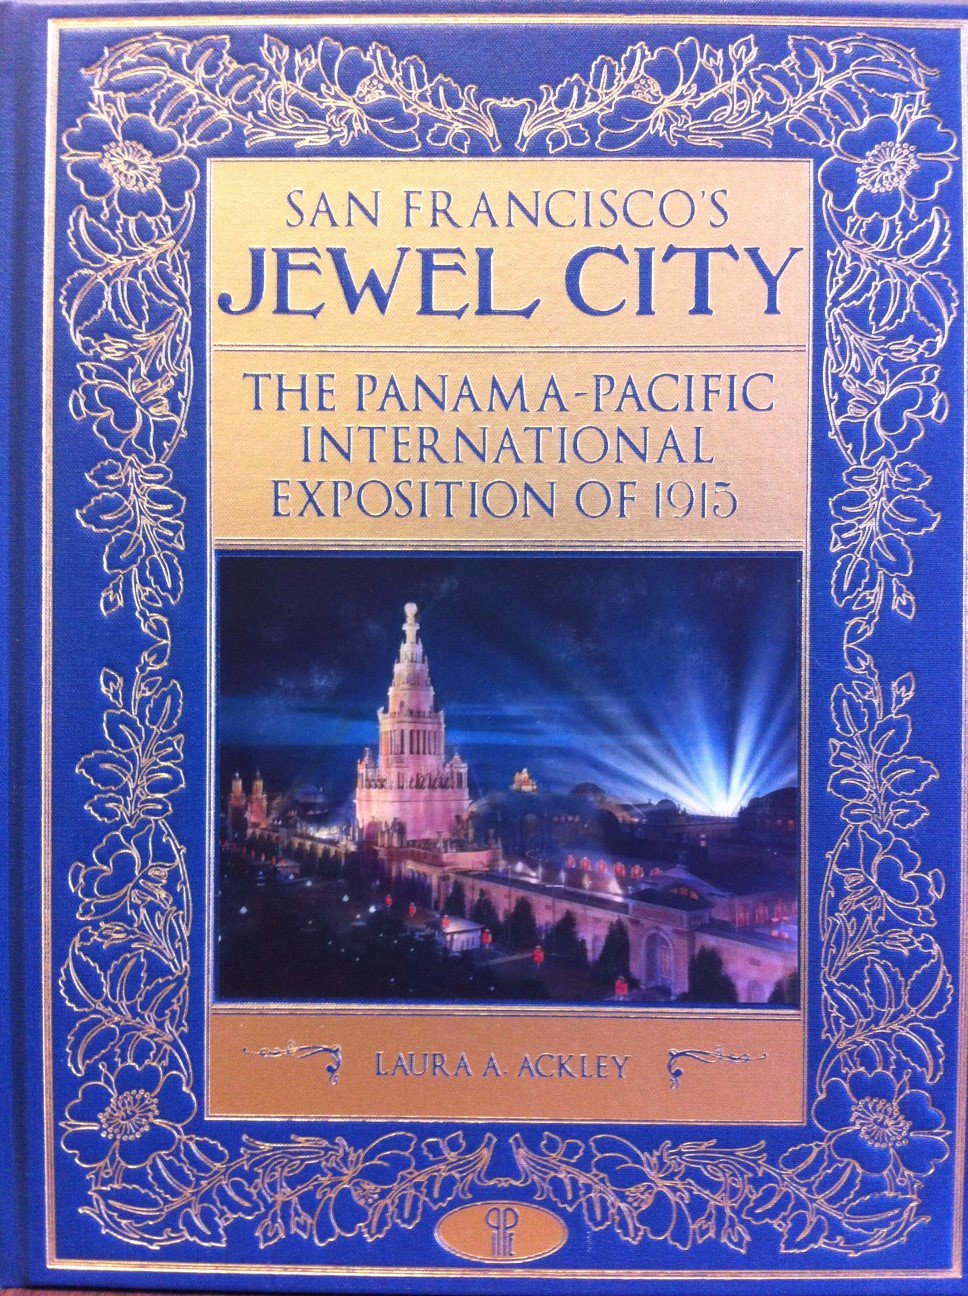 San Francisco's Jewel City - The Panama-Pacific International Exposition of 1915